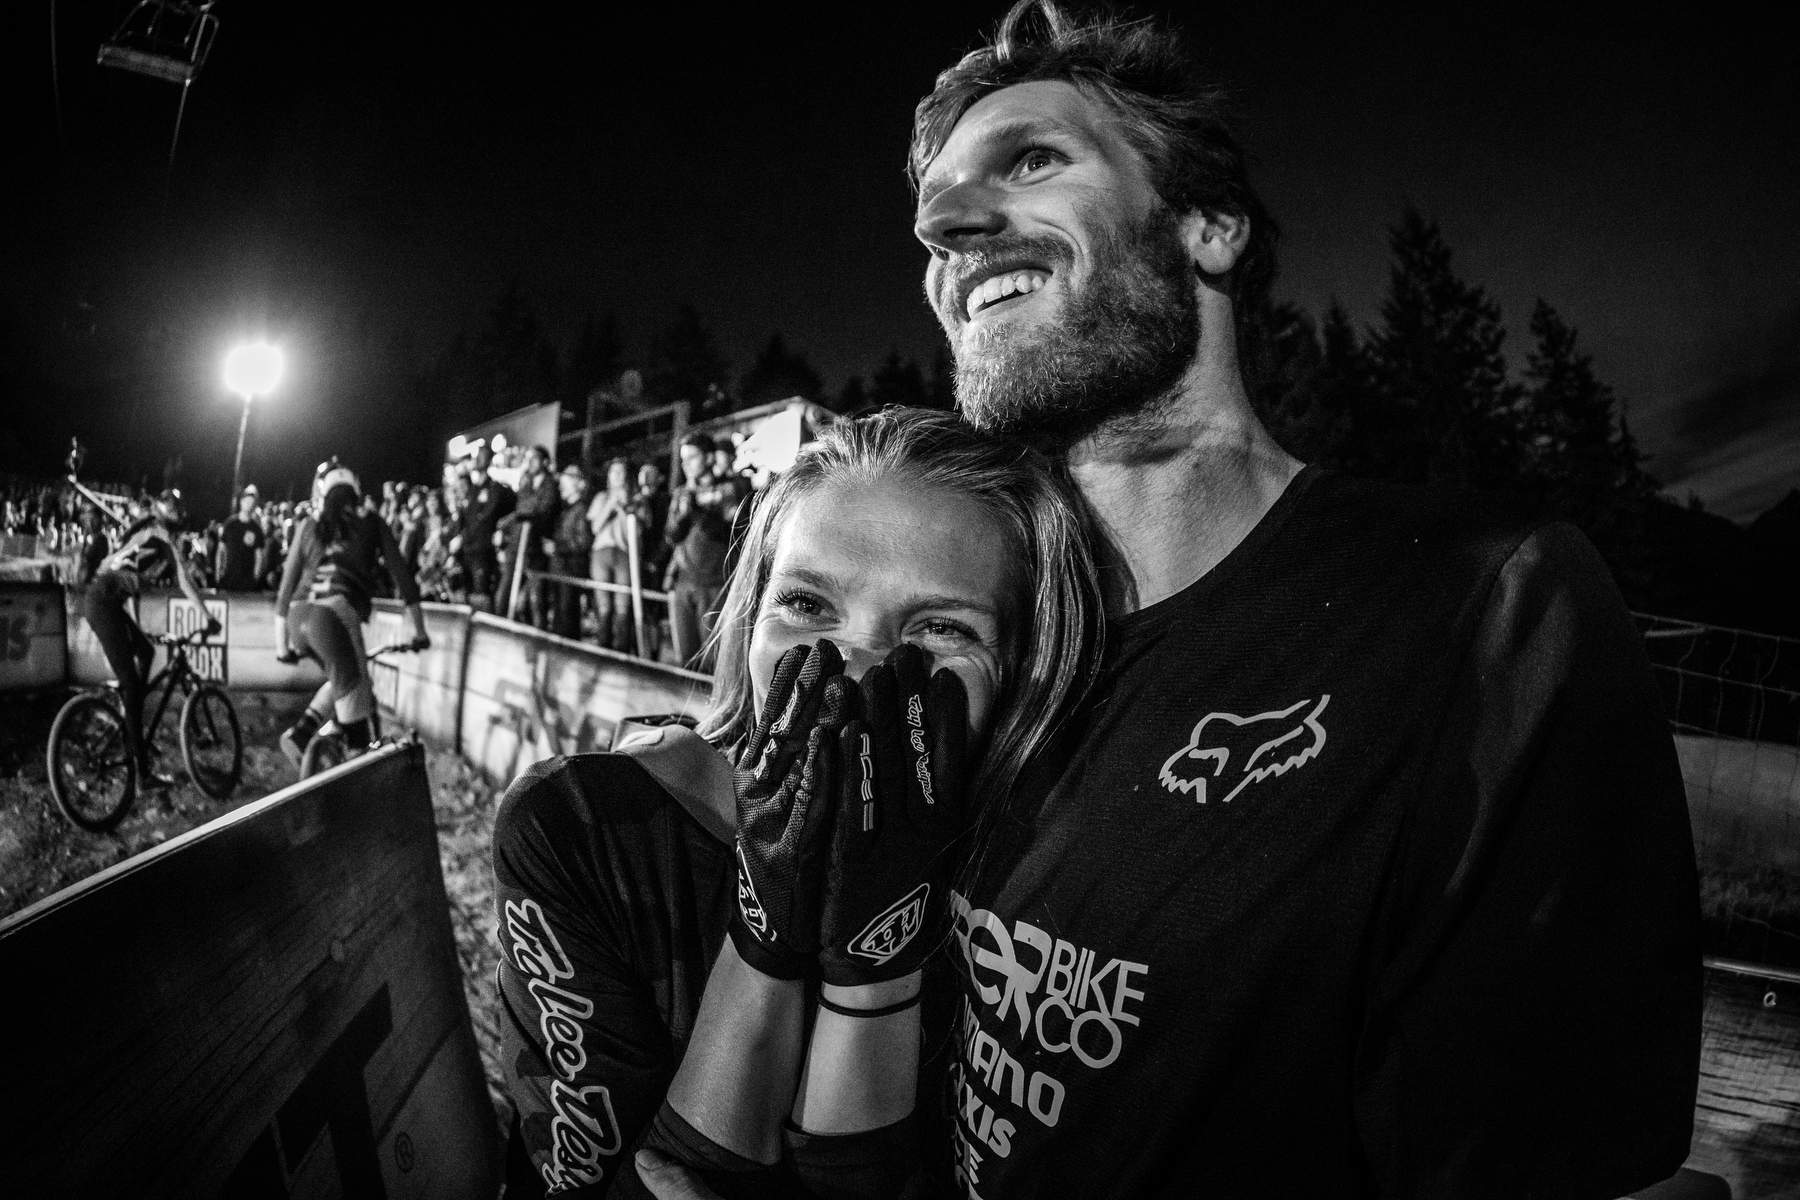 Vaea and boyfriend Bas VanSteenbergen smile upon hearing her victory announced.